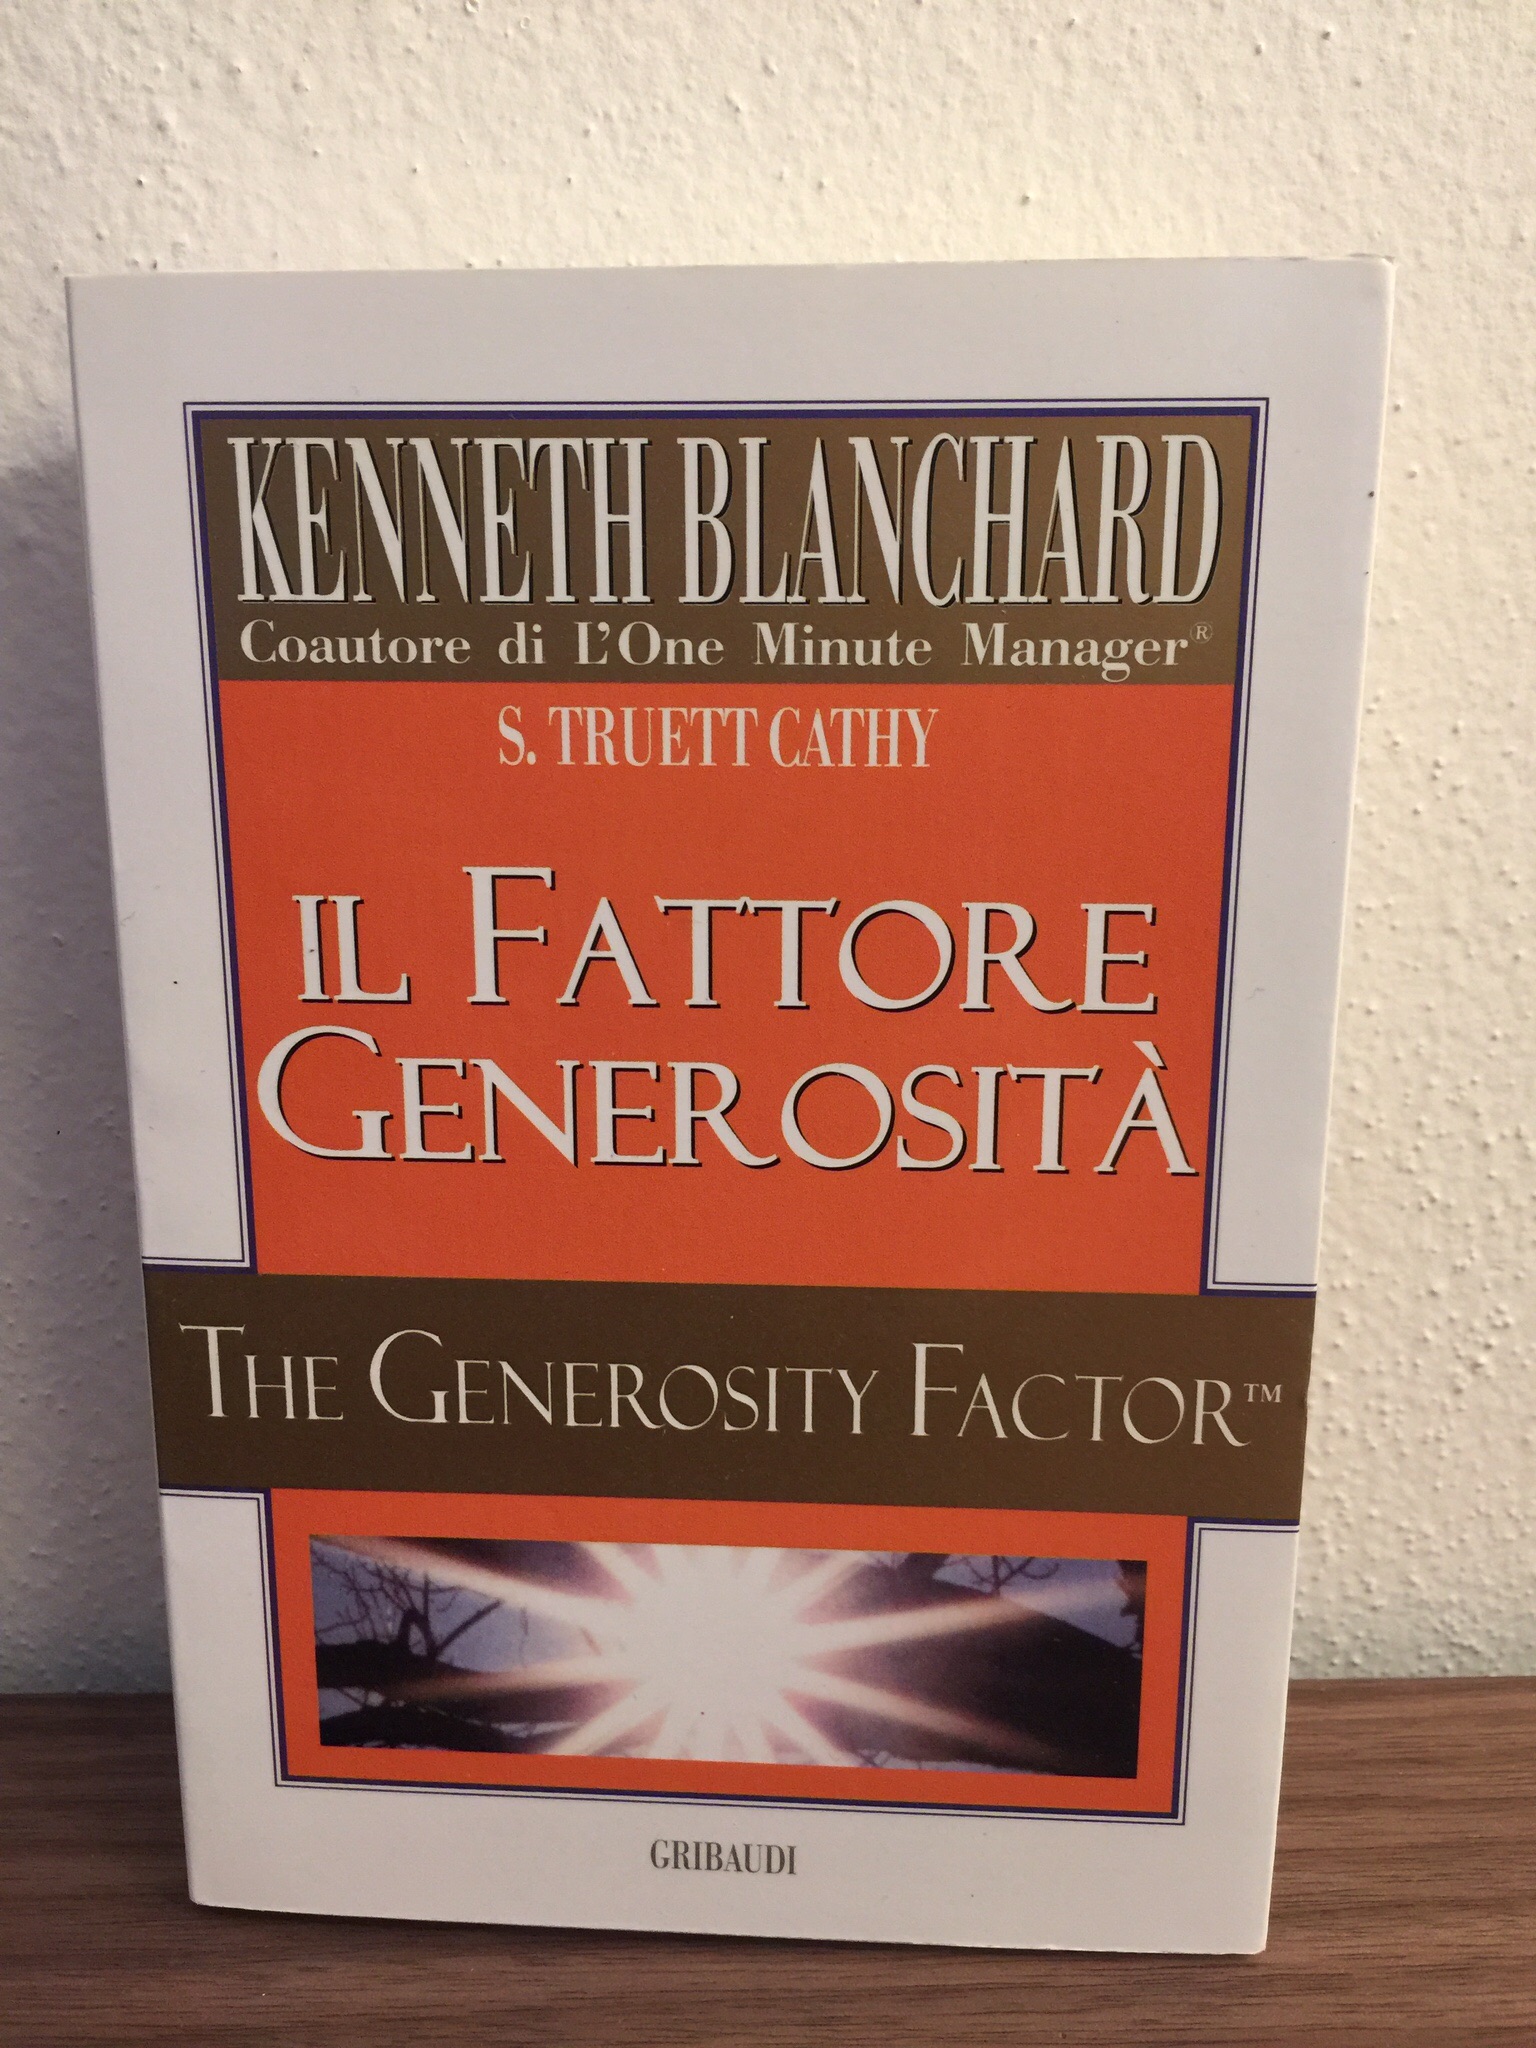 Kenneth Blanchard – Il fattore generosità